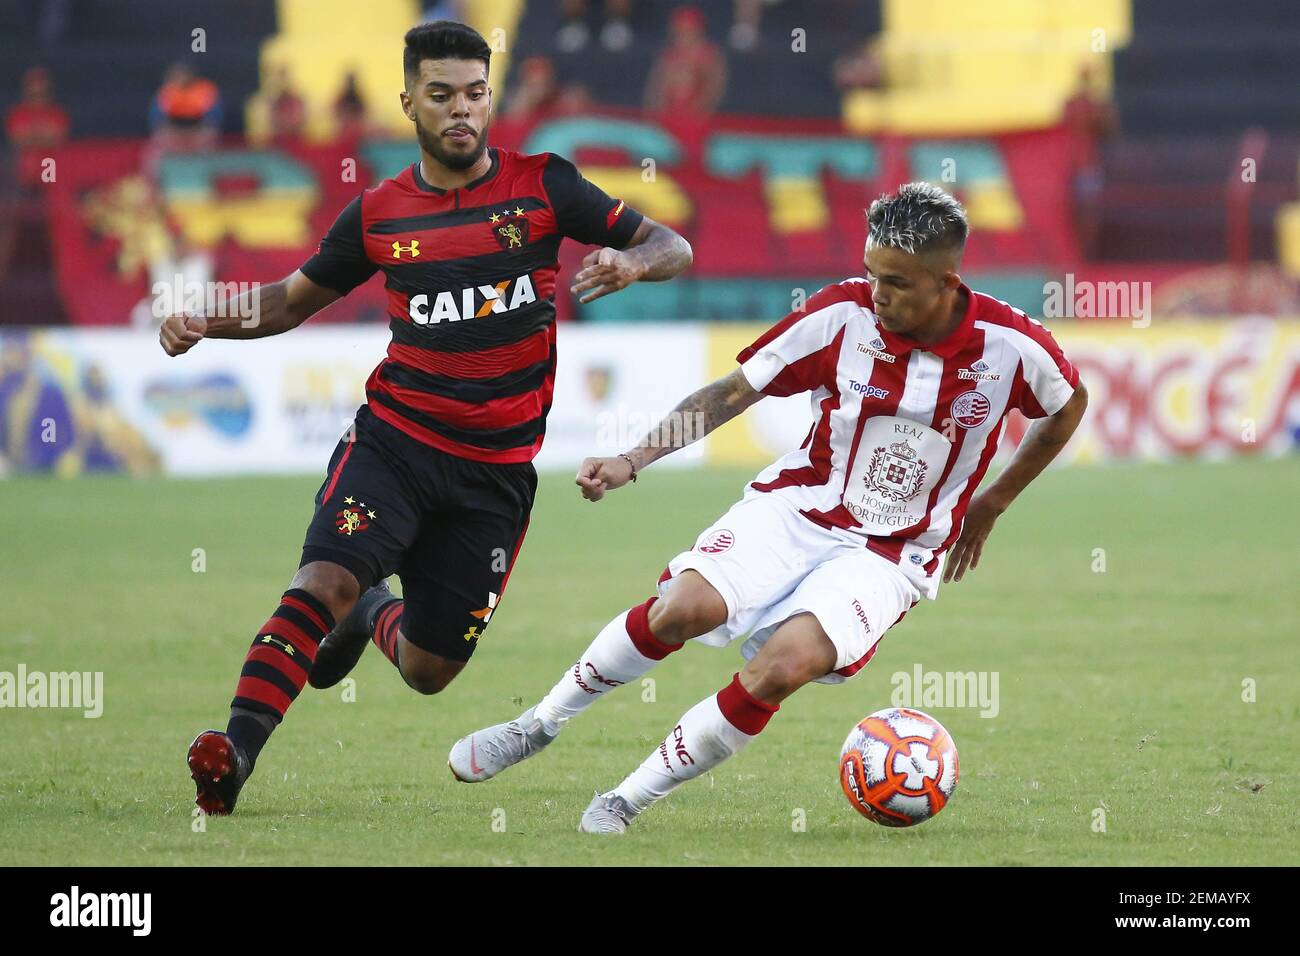 PE - Recife - 01/27/2019 - Pernambucano 2019, Sport Recife x Nautico -  Sport player disputes bid with